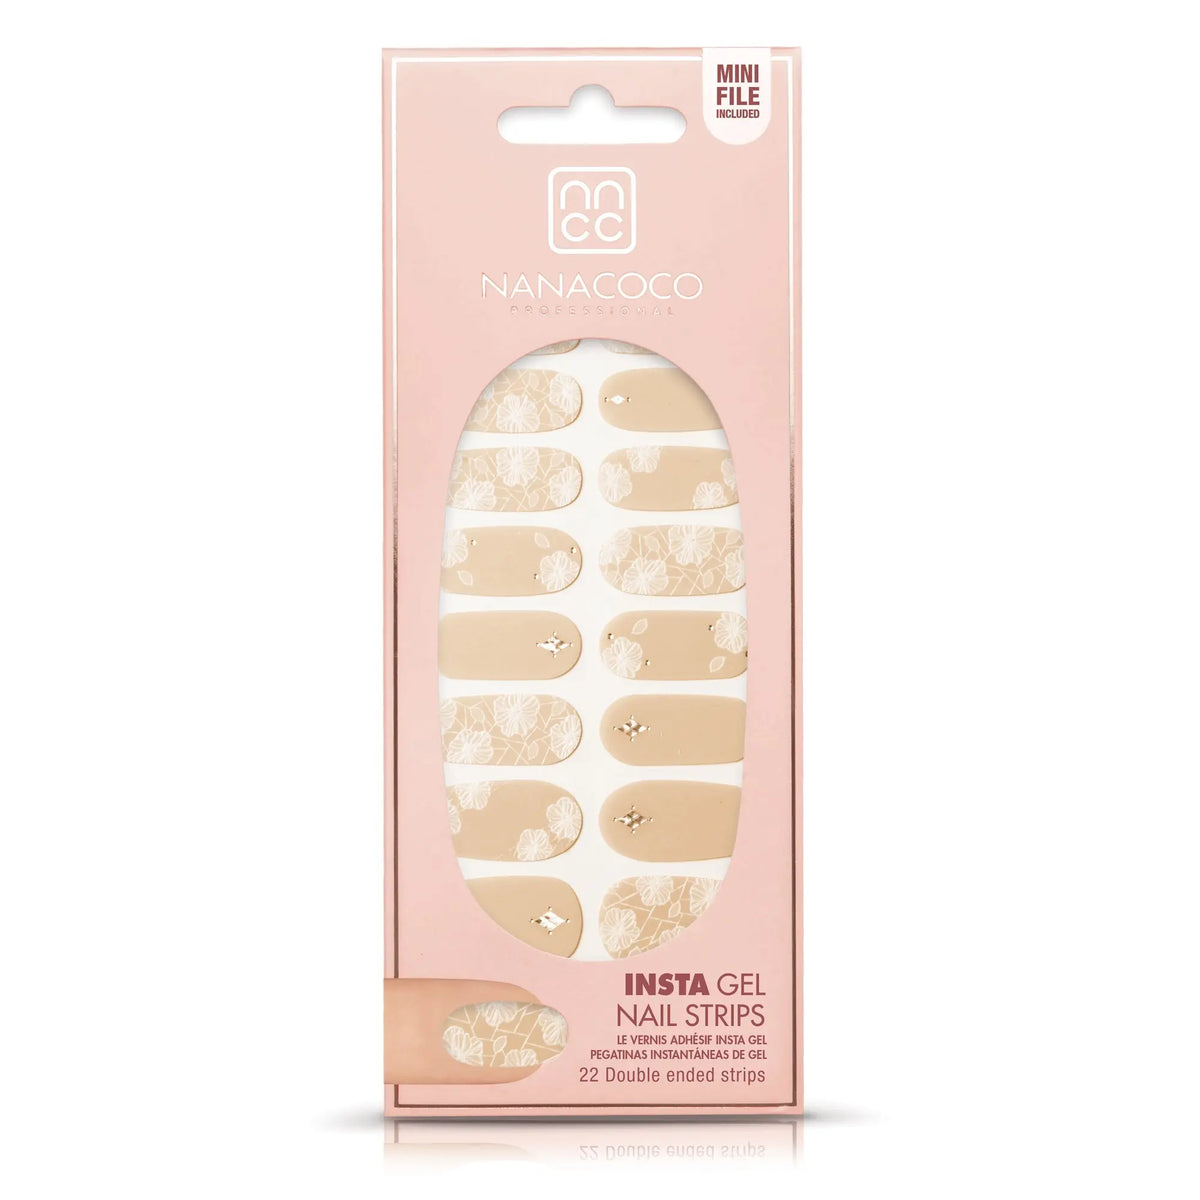 NANACOCO Insta Gel Nail Strips 22 strips Gloss (Wedding Lace) % | product_vendor%